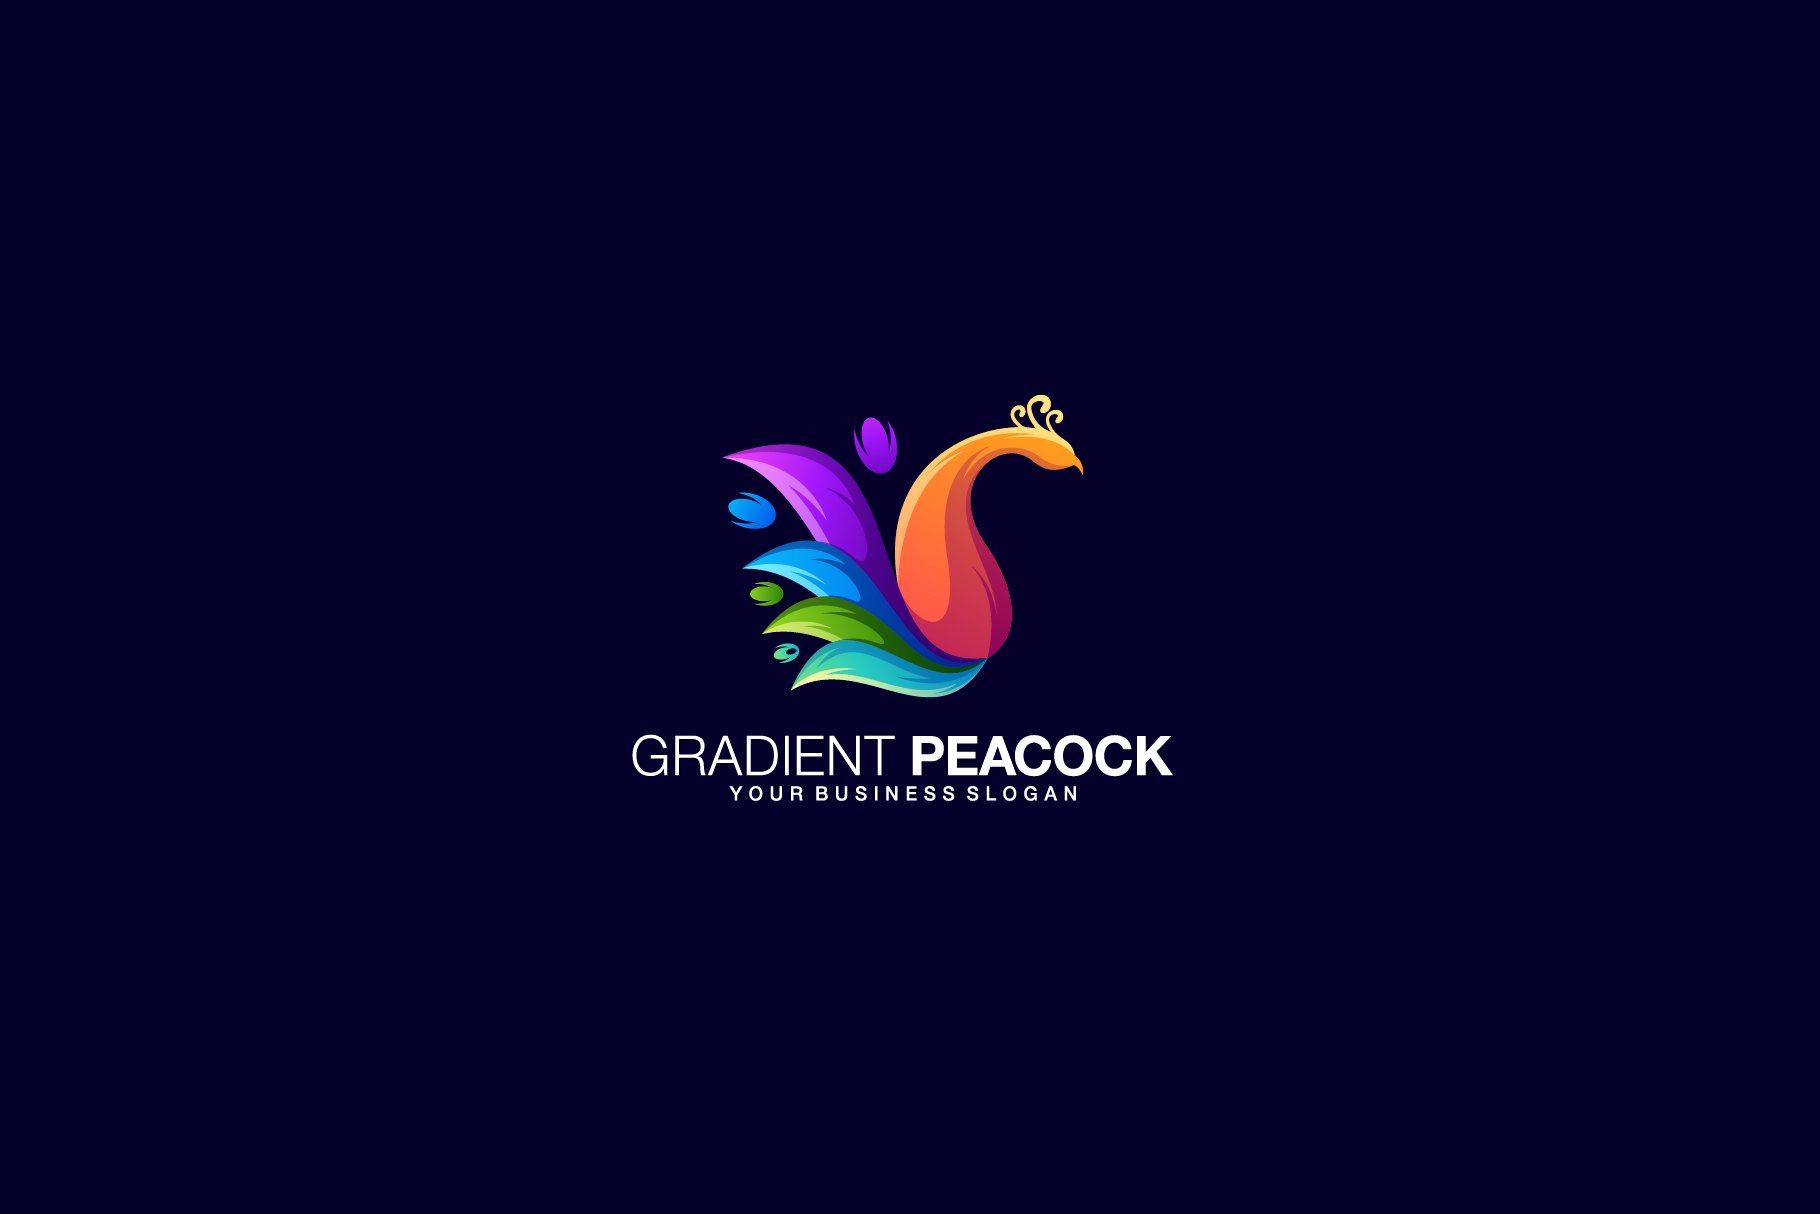 Gradient peacock logo design vector cover image.